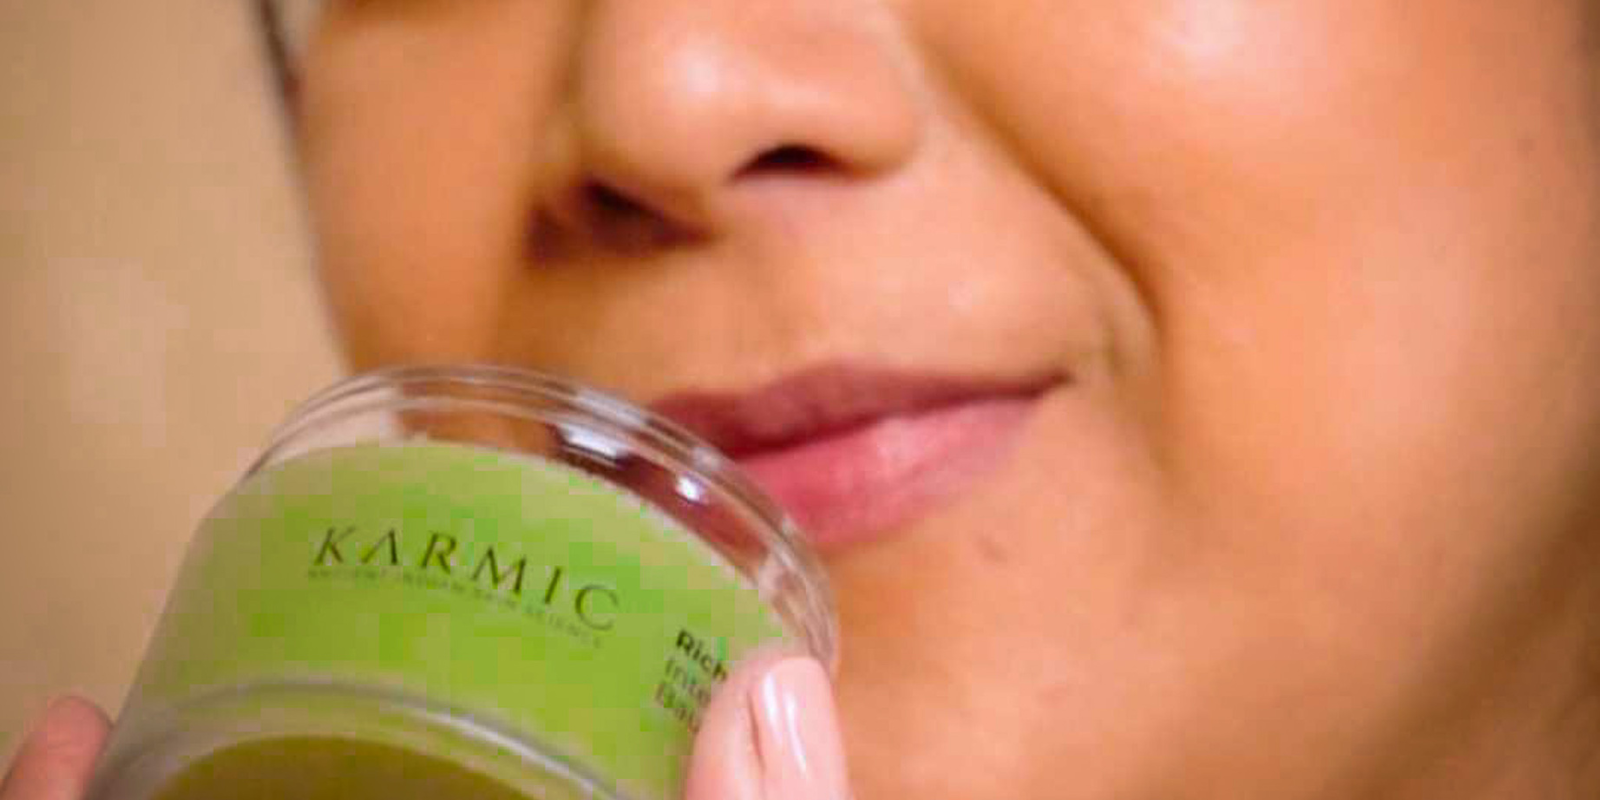 karmic skin moisturiser to nourish the skin barrier